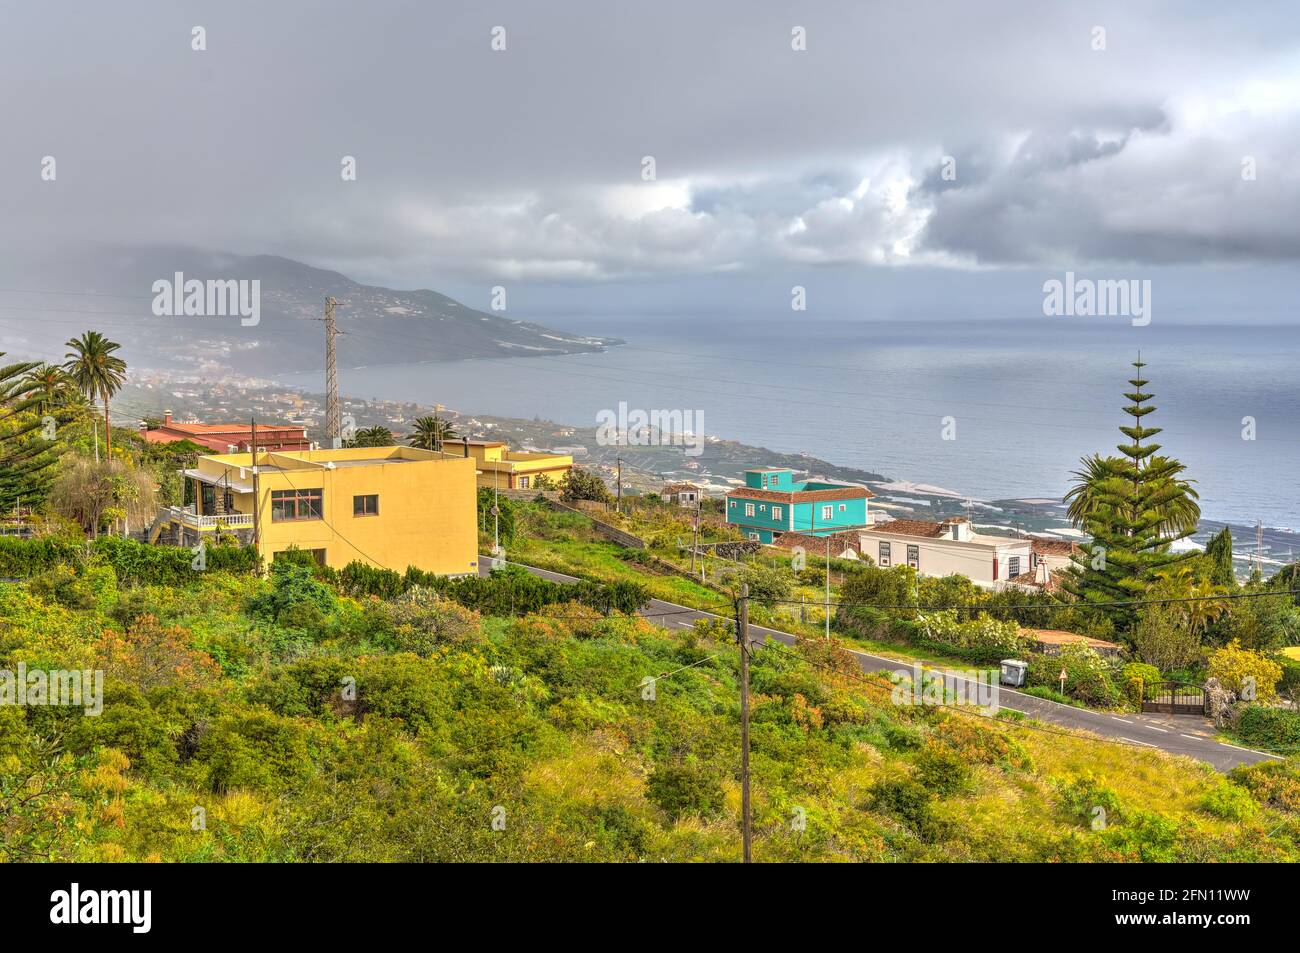 Villa de Mazo, La Palma, HDR Image Stock Photo